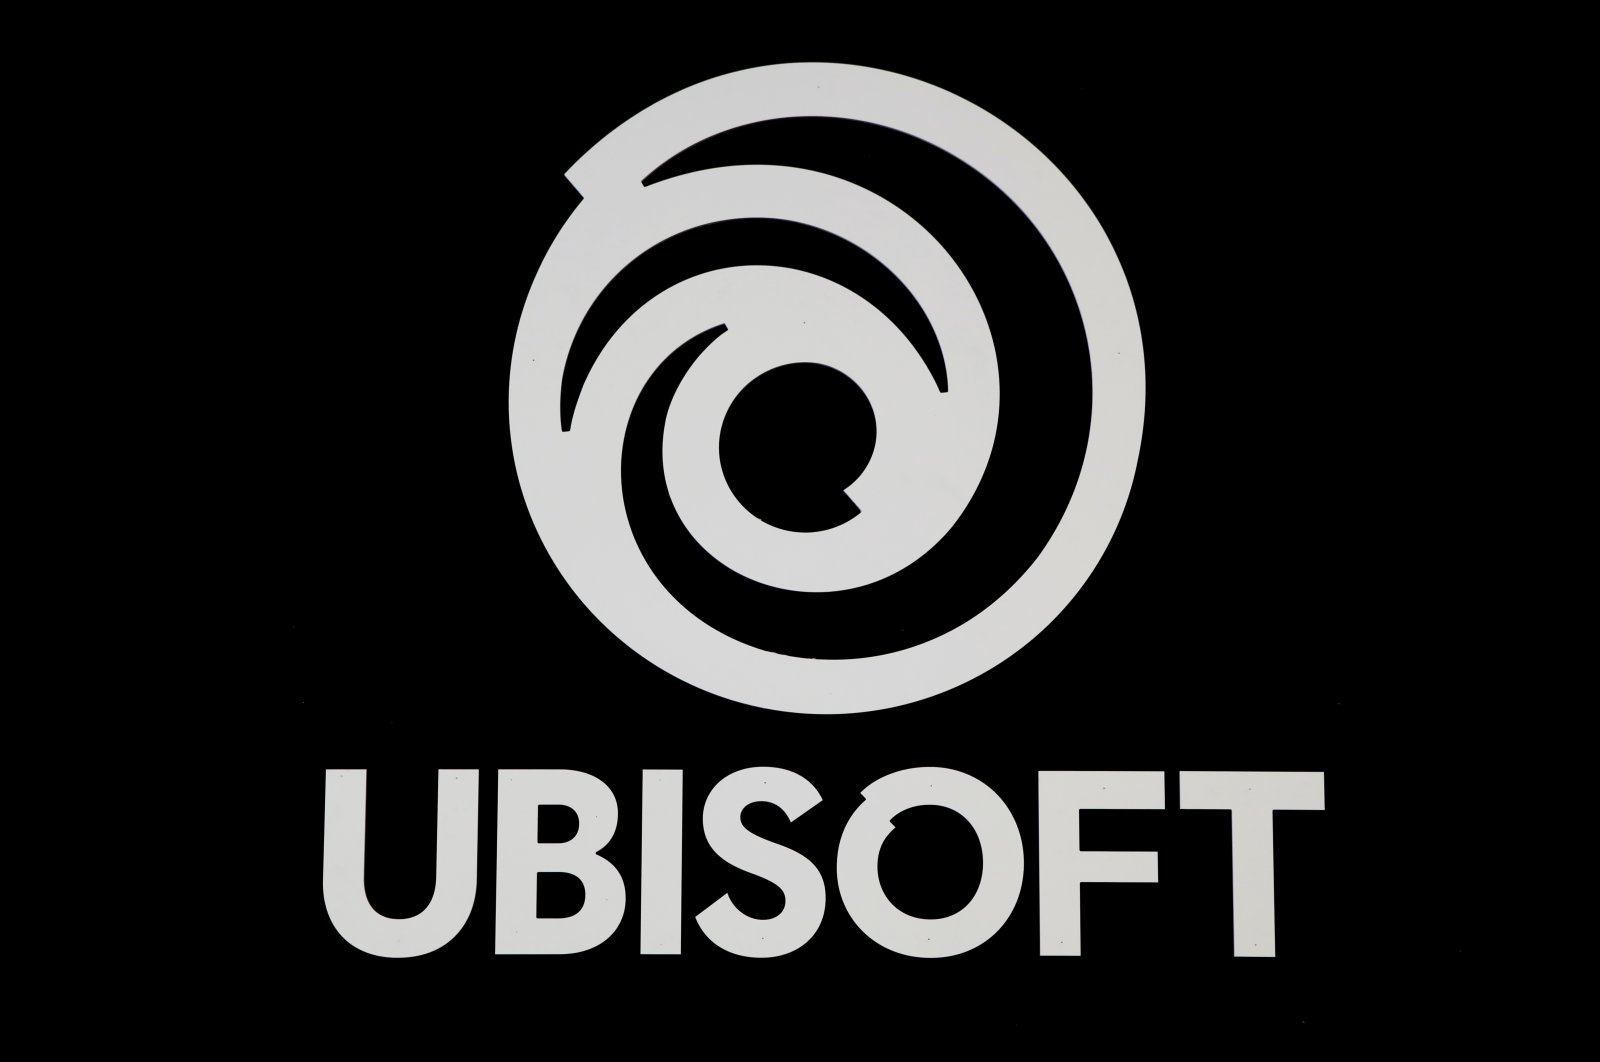 The UbiSoft logo in Paris, France, Oct. 29, 2019. (Reuters Photo)